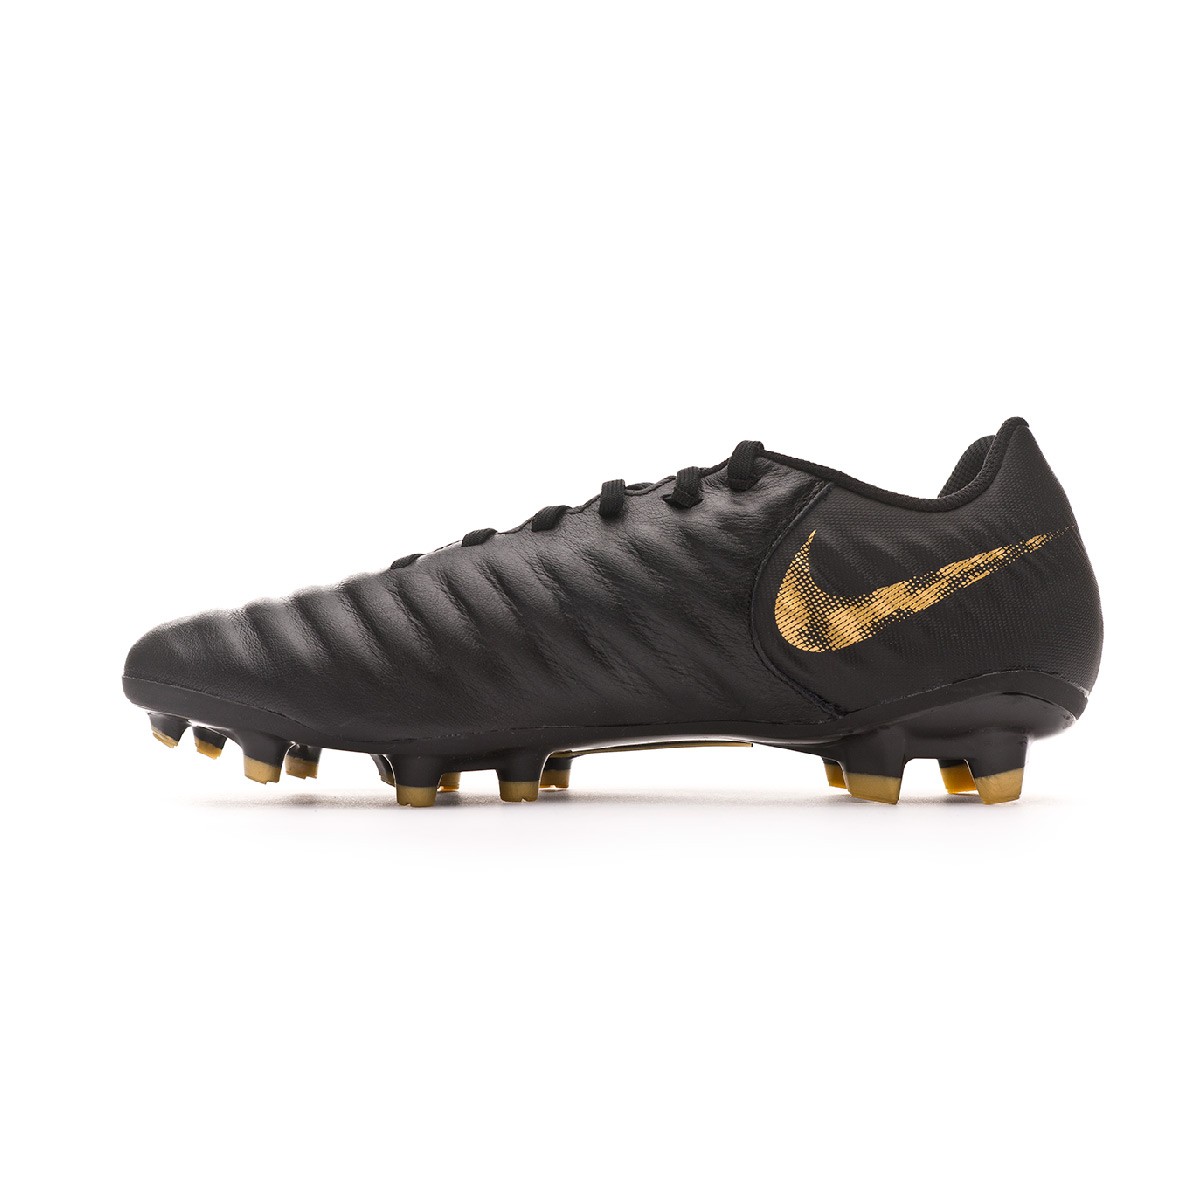 Football Boots Nike Tiempo Legend VII Academy FG Black-Metallic vivid gold  - Football store Fútbol Emotion